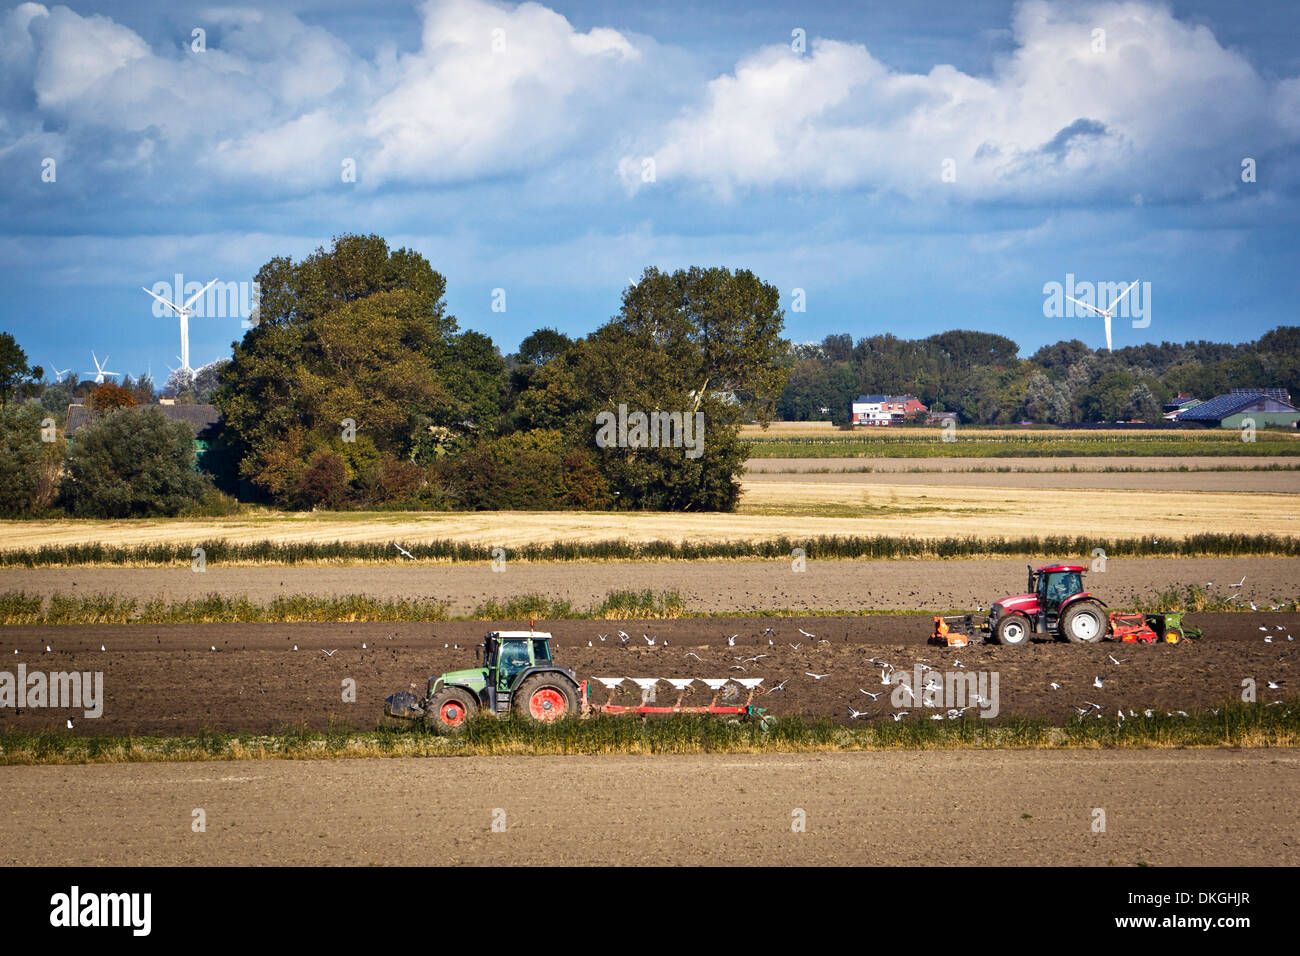 Le tracteur sur champ, Nordstrand, Schleswig-Holstein, Allemagne, Europe Banque D'Images